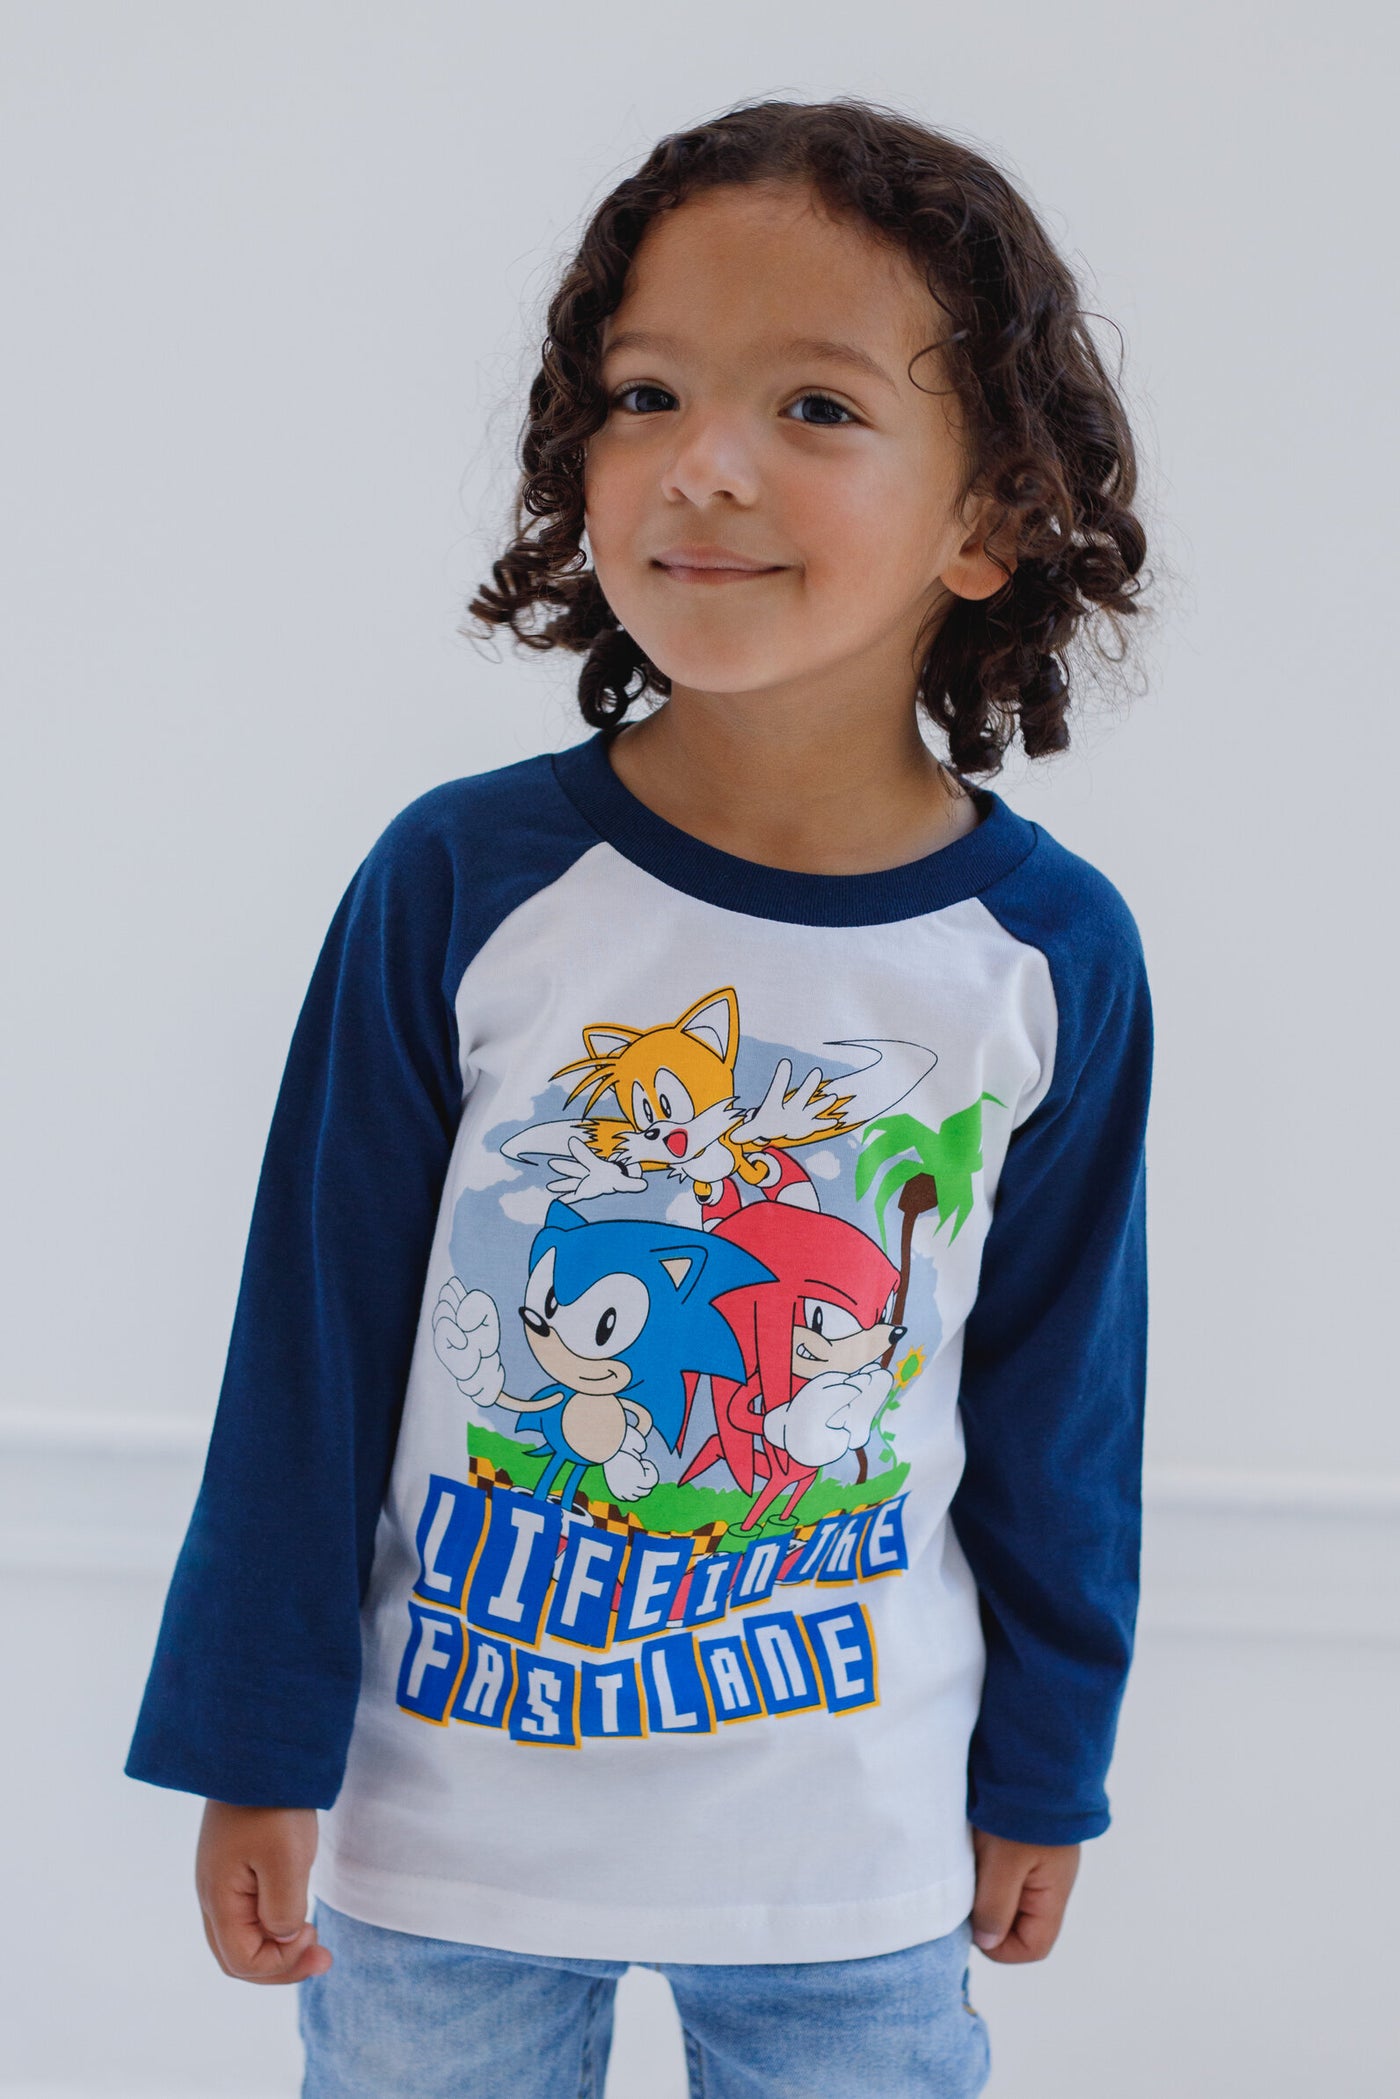 SEGA Sonic the Hedgehog Tails Knuckles 2 Pack T-Shirts